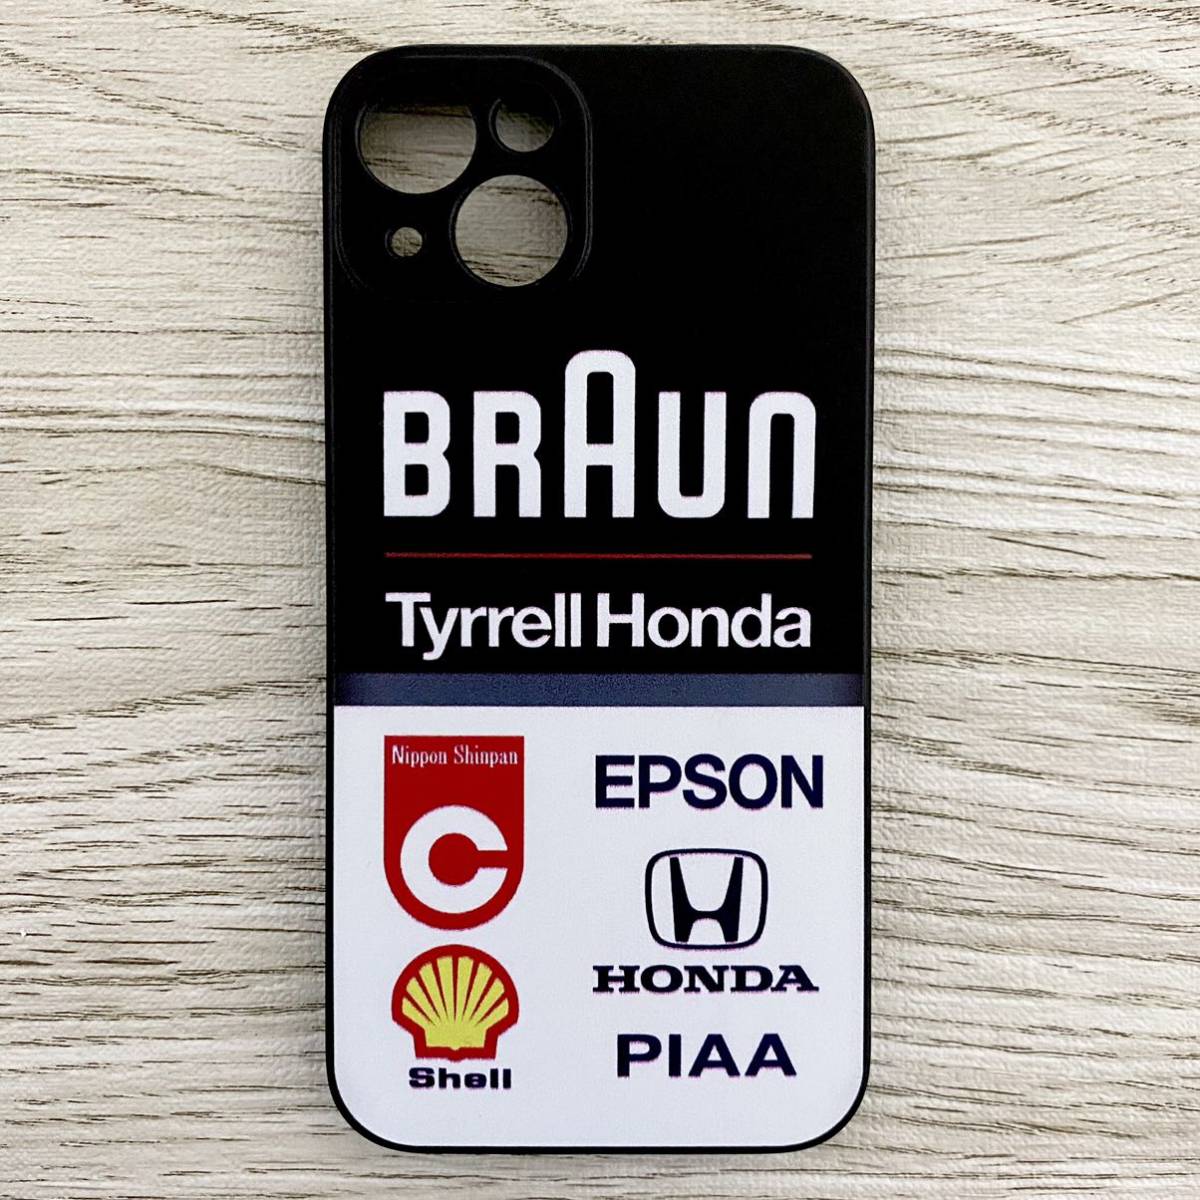  Brown tireru Honda iPhone 13 case F1 Tyrrell 020 Nakajima Satoru stereo fano* modena smartphone 